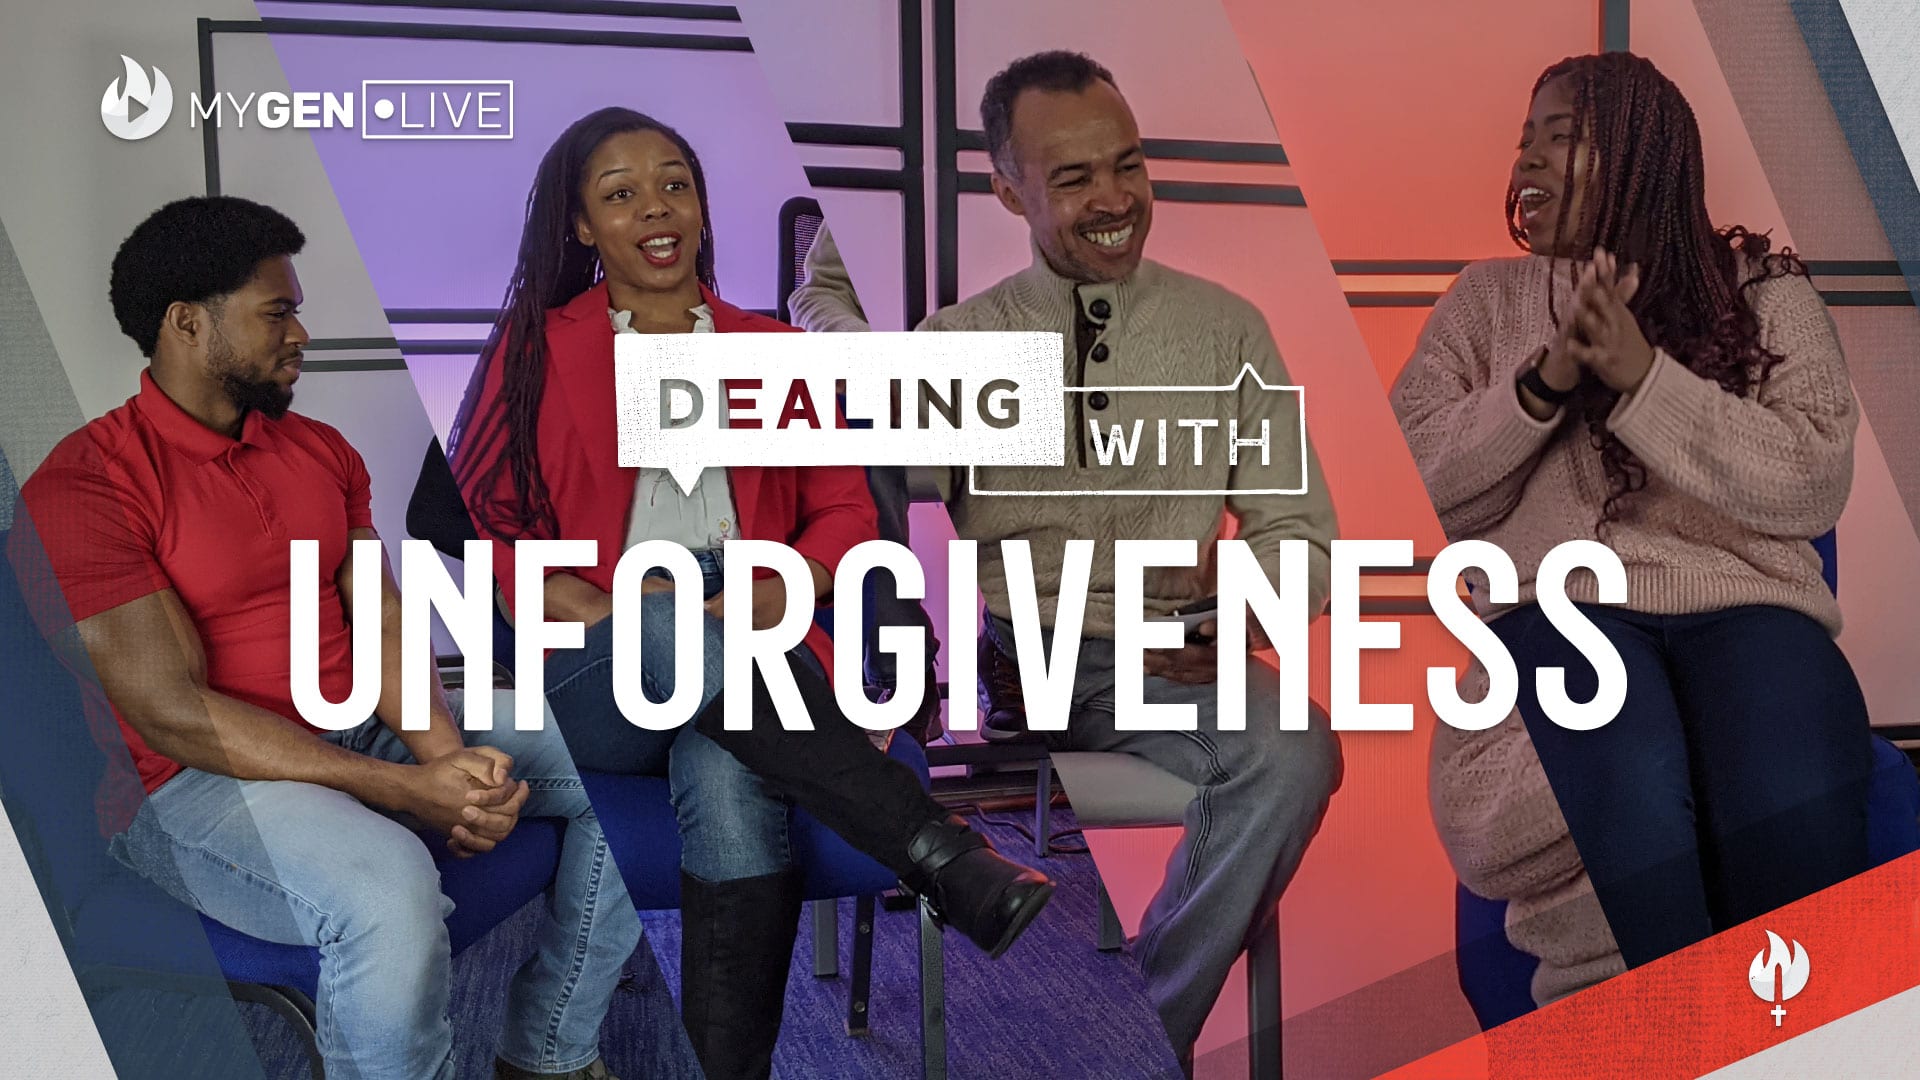 MyGen LIVE: Dealing With Unforgiveness